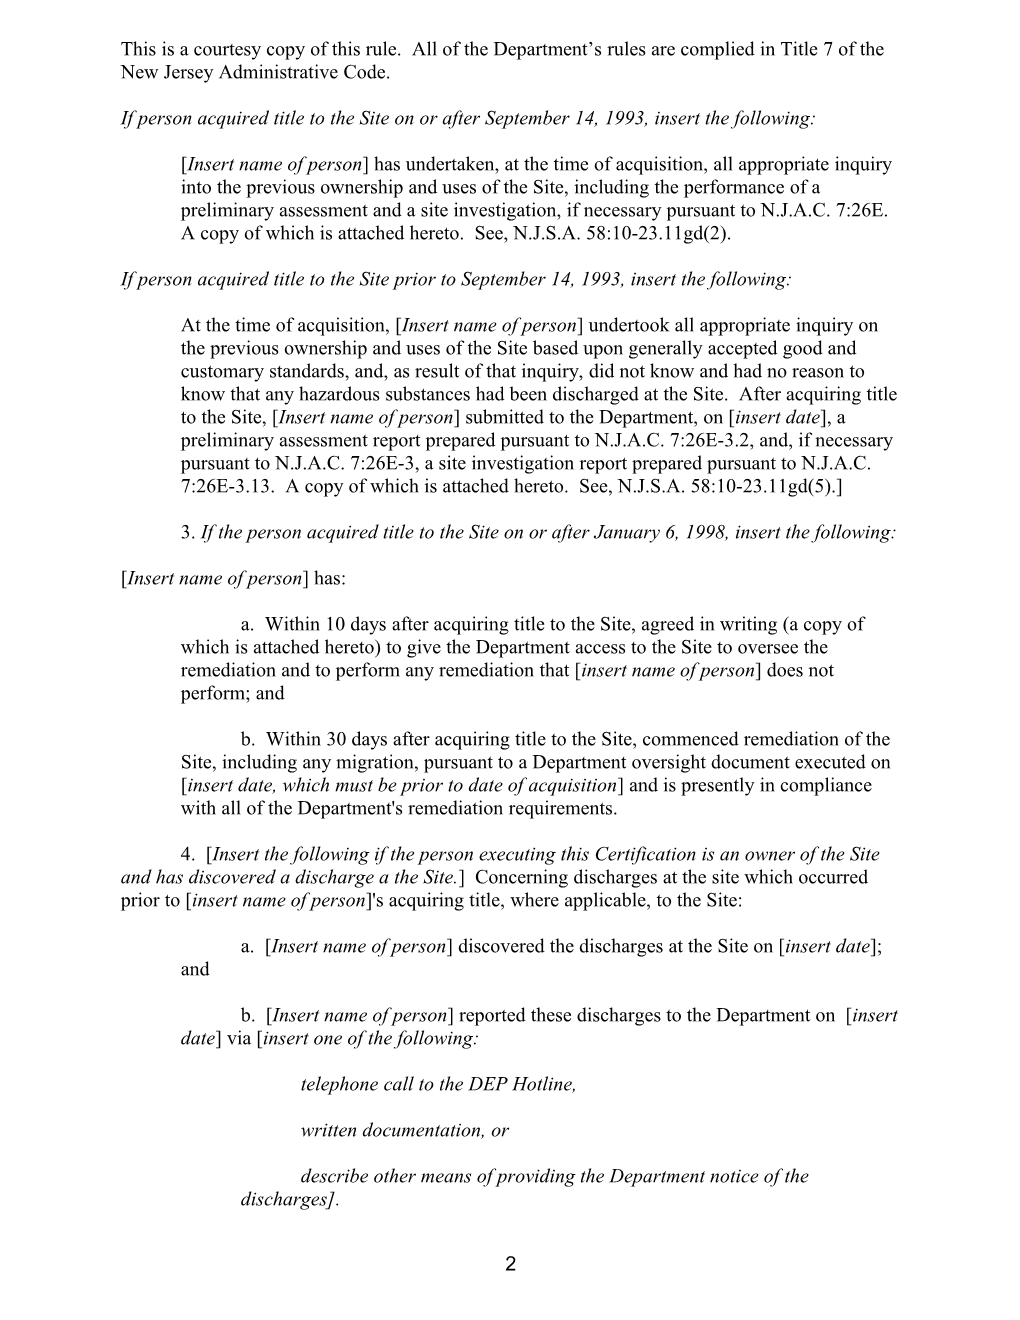 Appendix D: Developer Certification - N.J.A.C. 7:26C Department Oversight of the Remediation